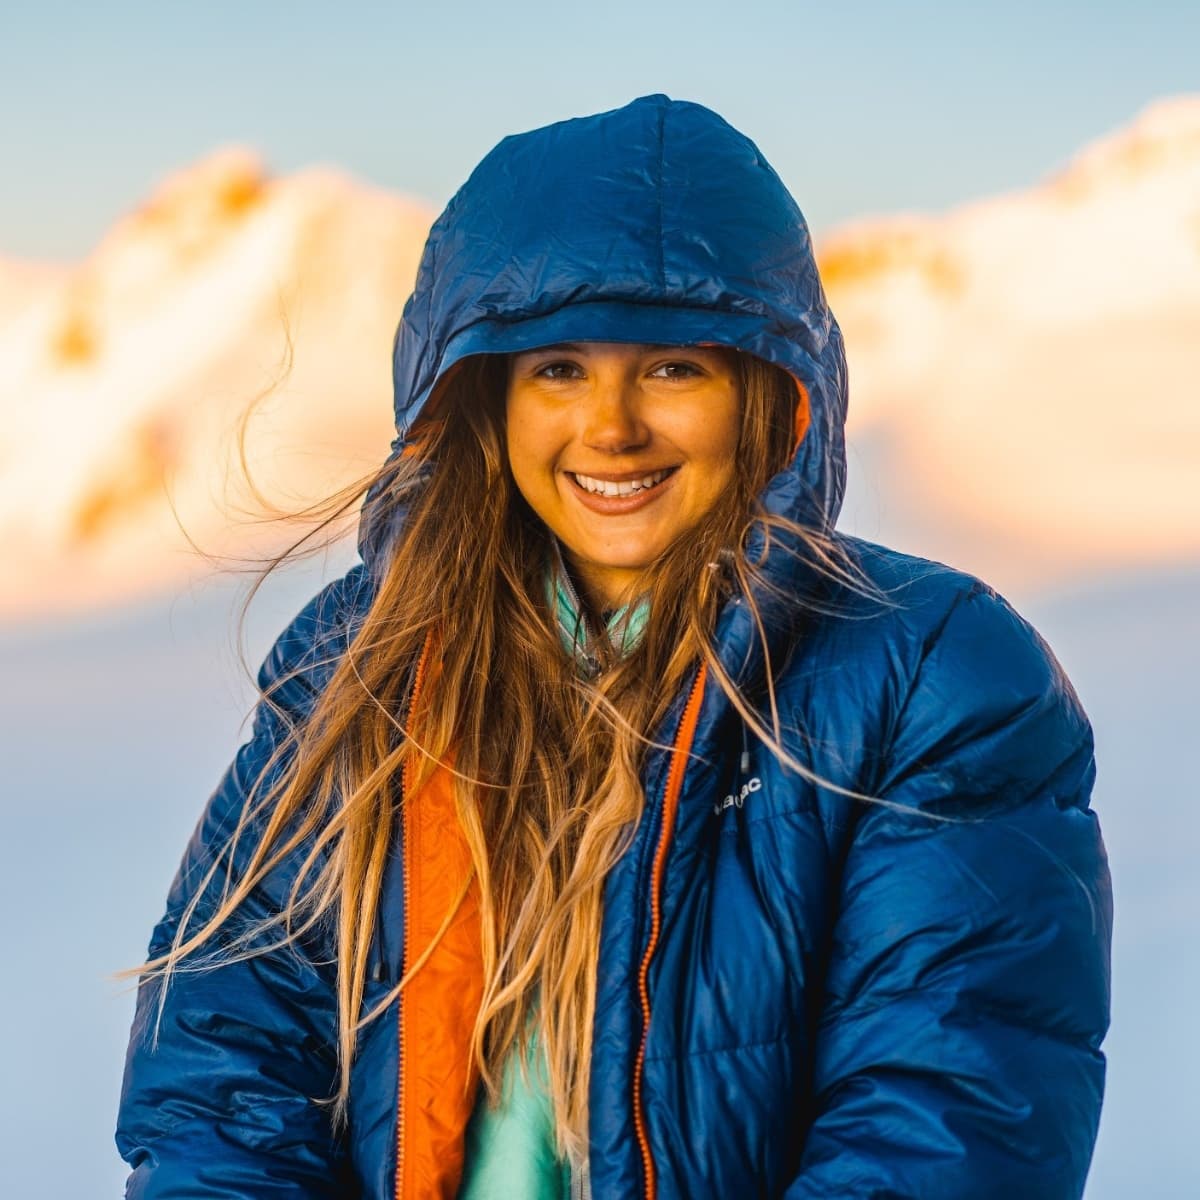 Meet Sarah Morrison: Mountaineer, Adventurer and Mental Health Advocate